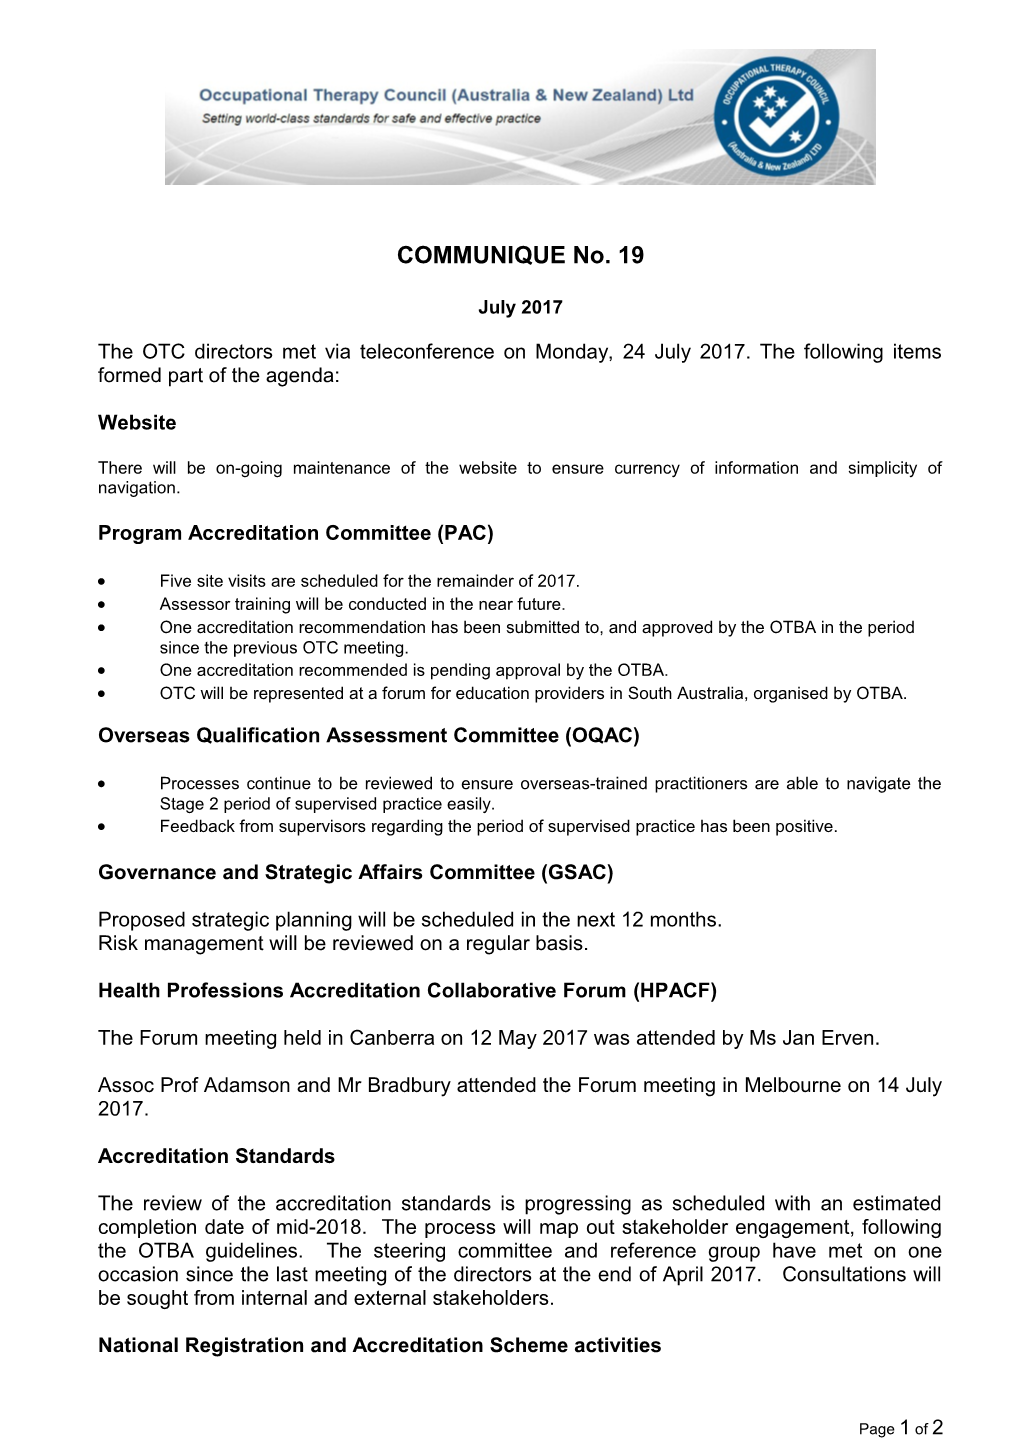 Program Accreditation Committee (PAC)